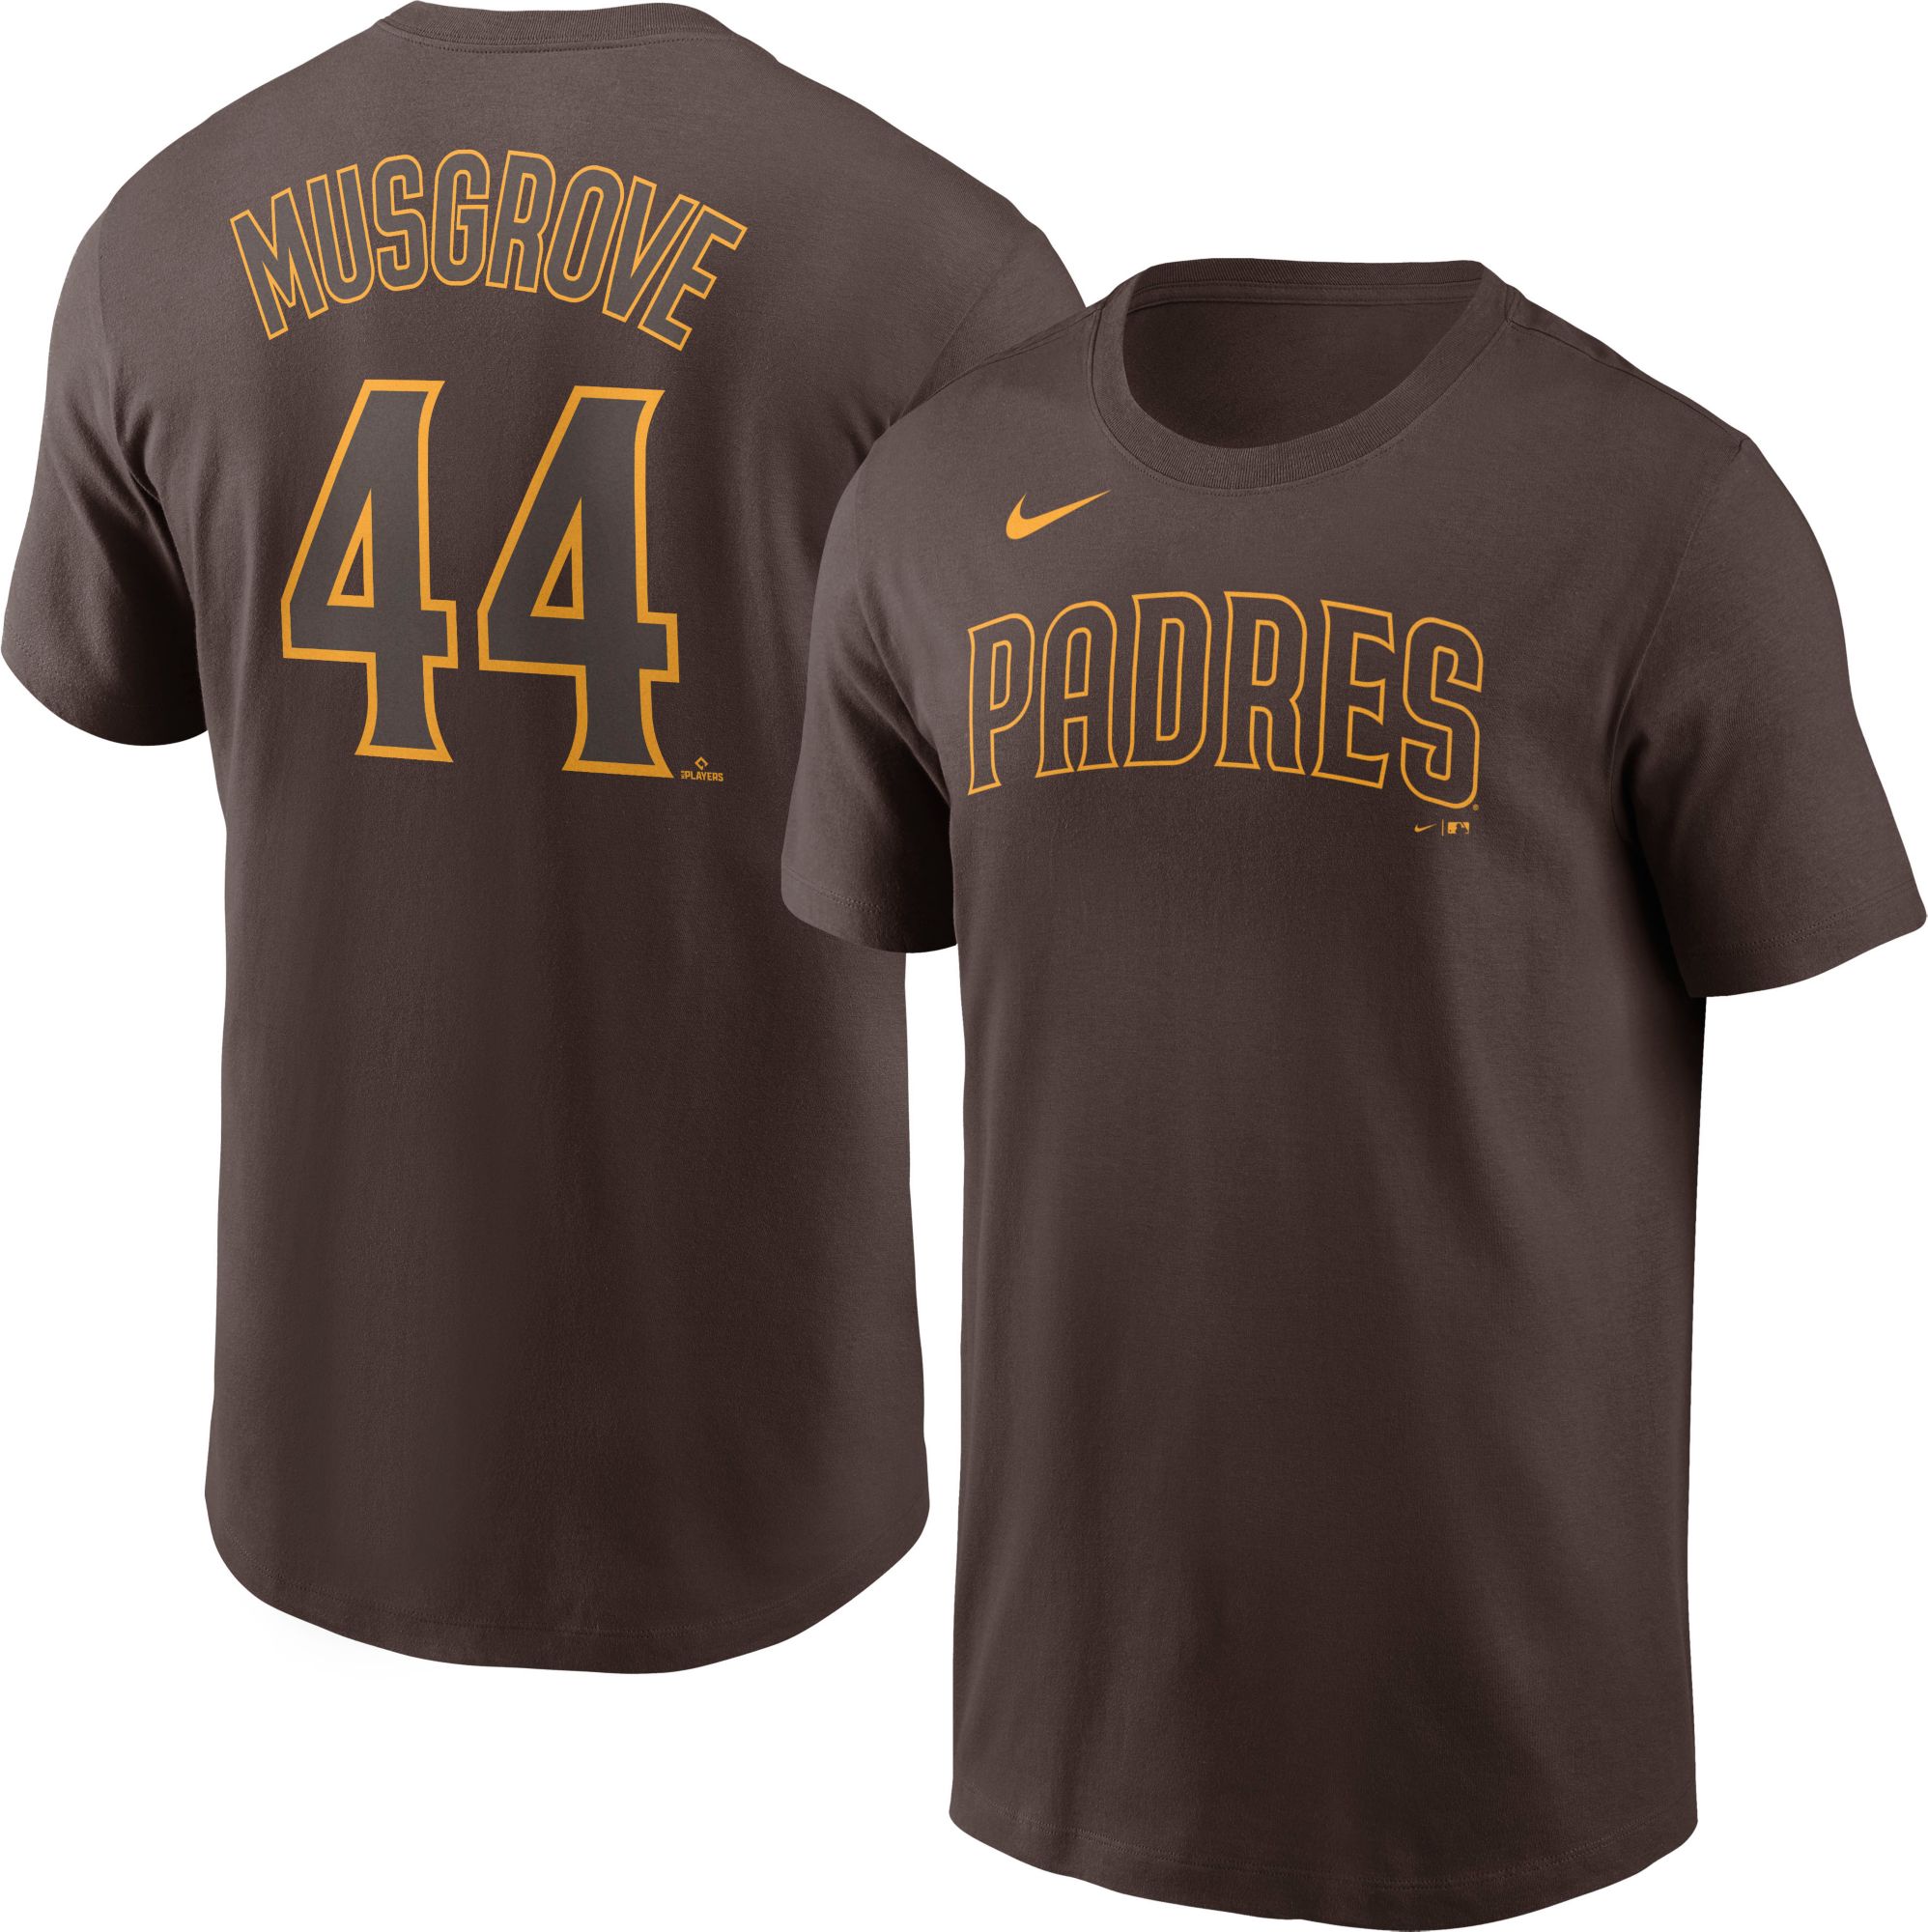 #44 Joe Musgrove San Diego Padres SLIM FIT Shirt Tri-Blend or 100%Cotton